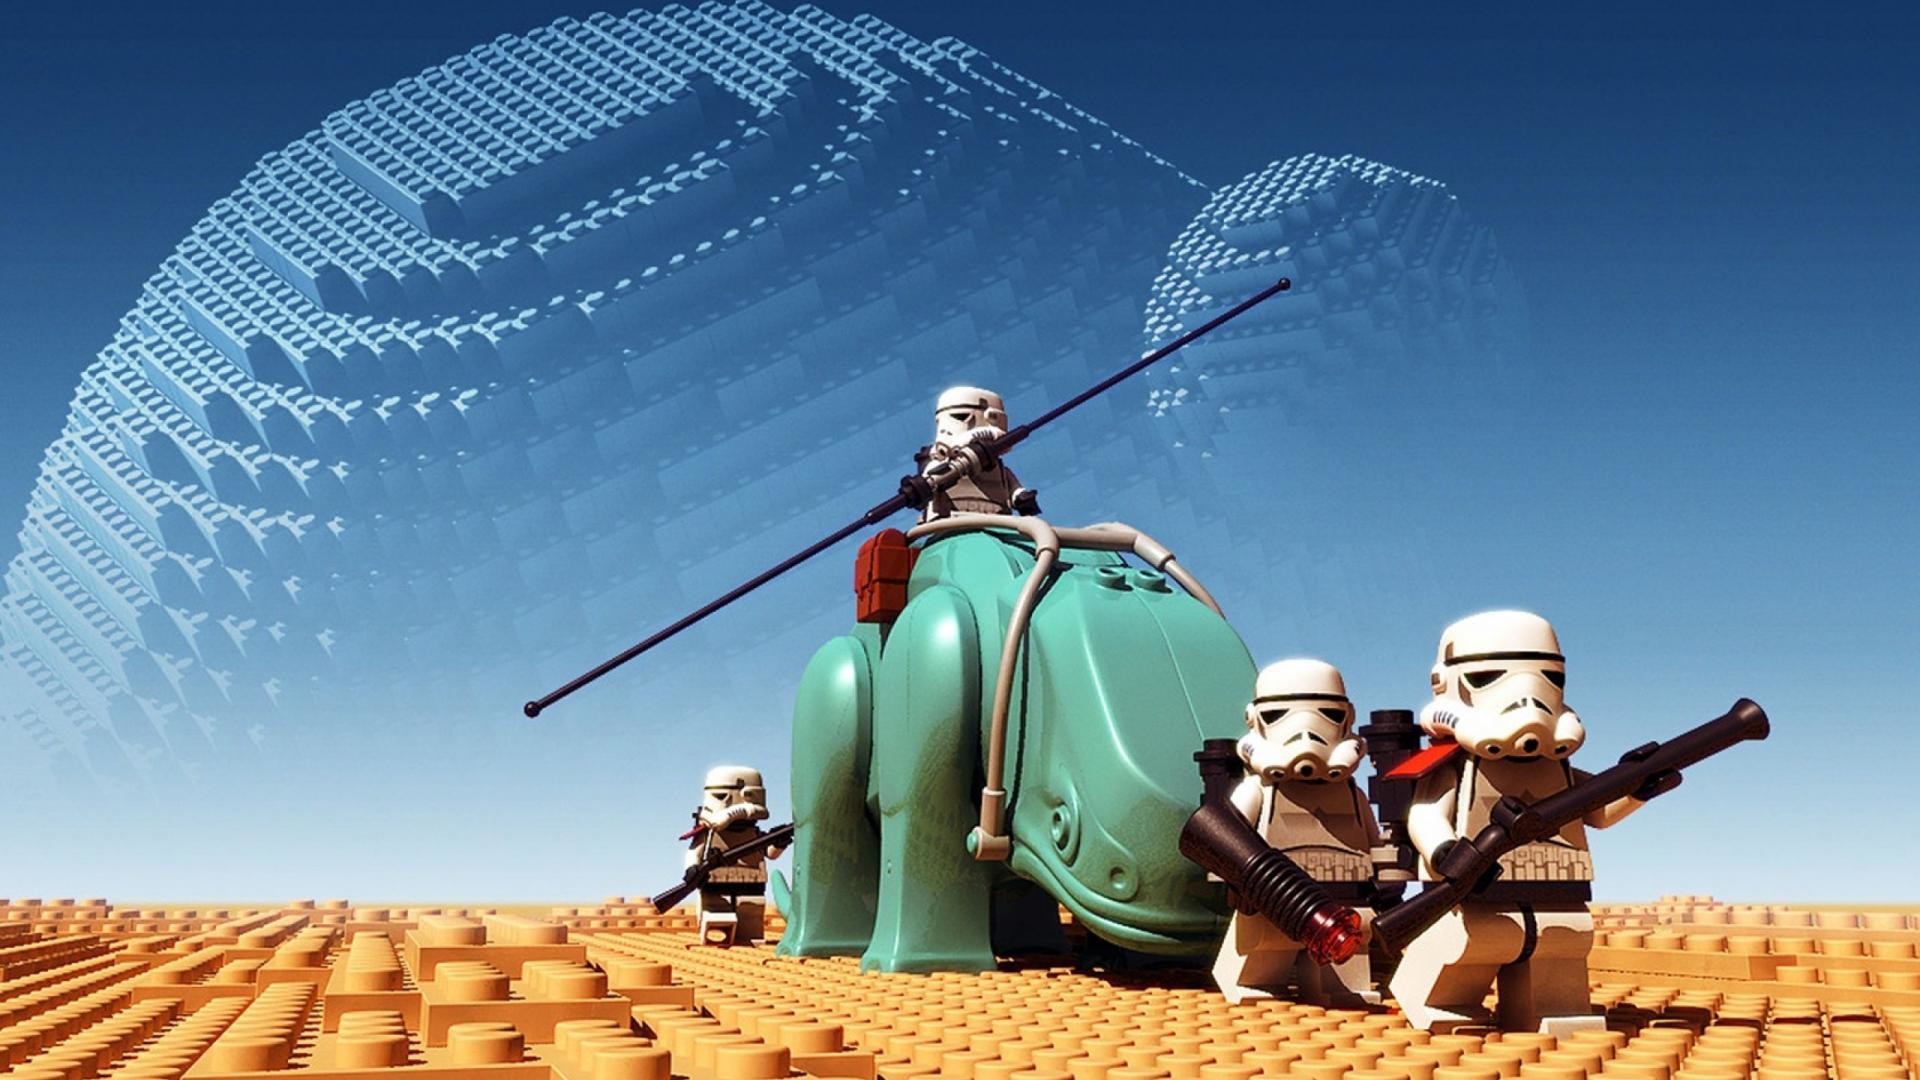 1920x1080 Star Wars Lego Troopers HD Wallpaper Star Wars Lego Troopers 